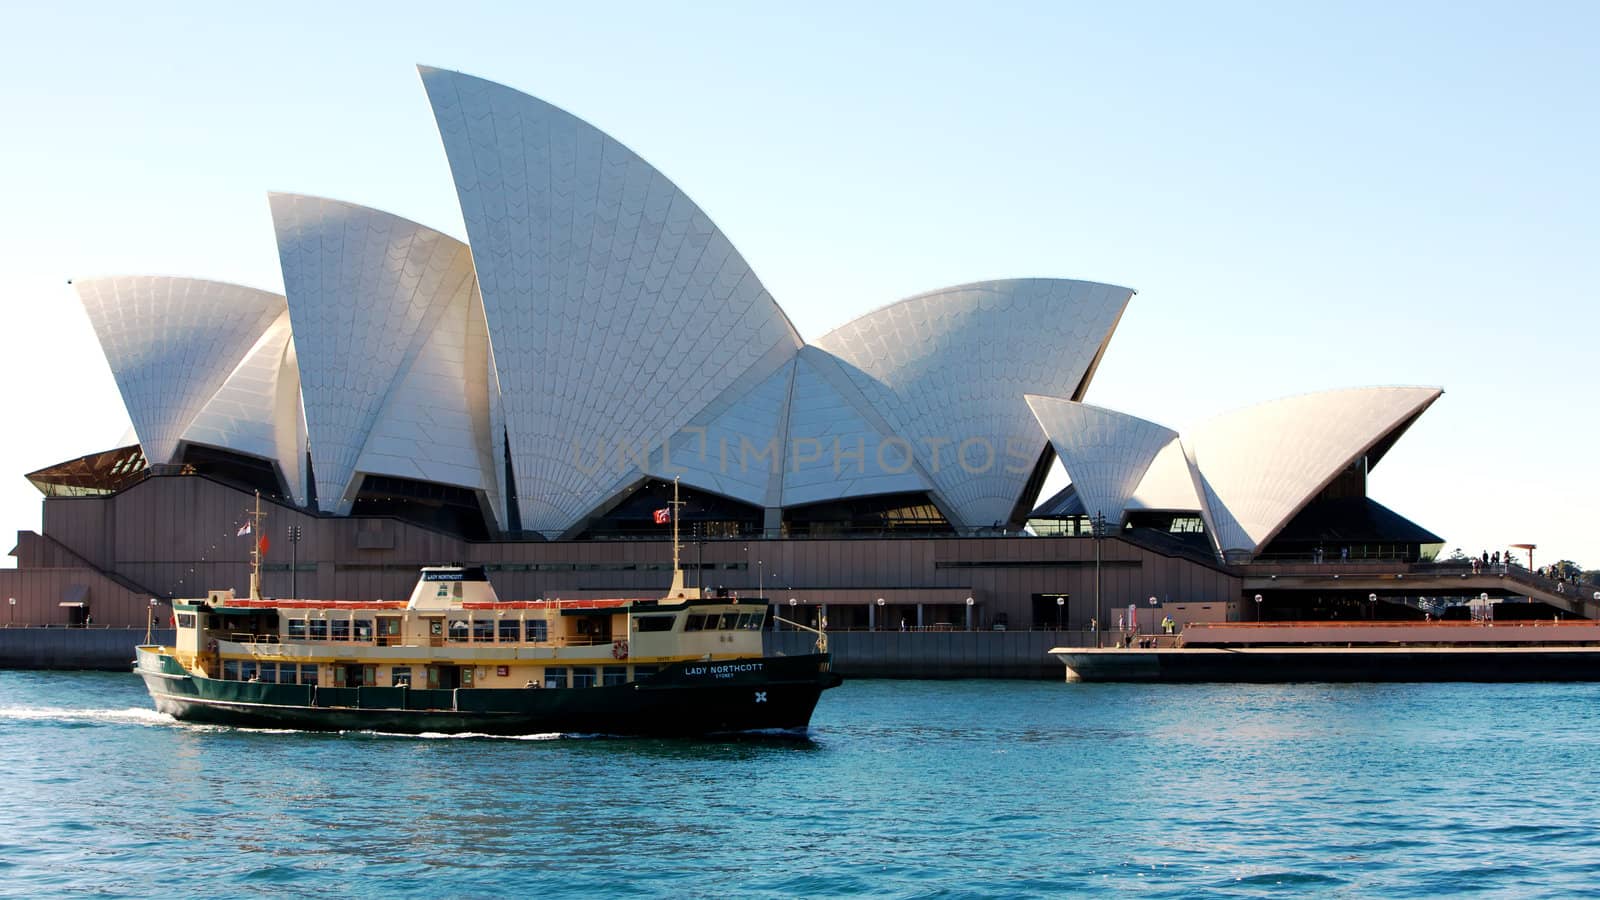 Sydney Opera House in Australia by instinia